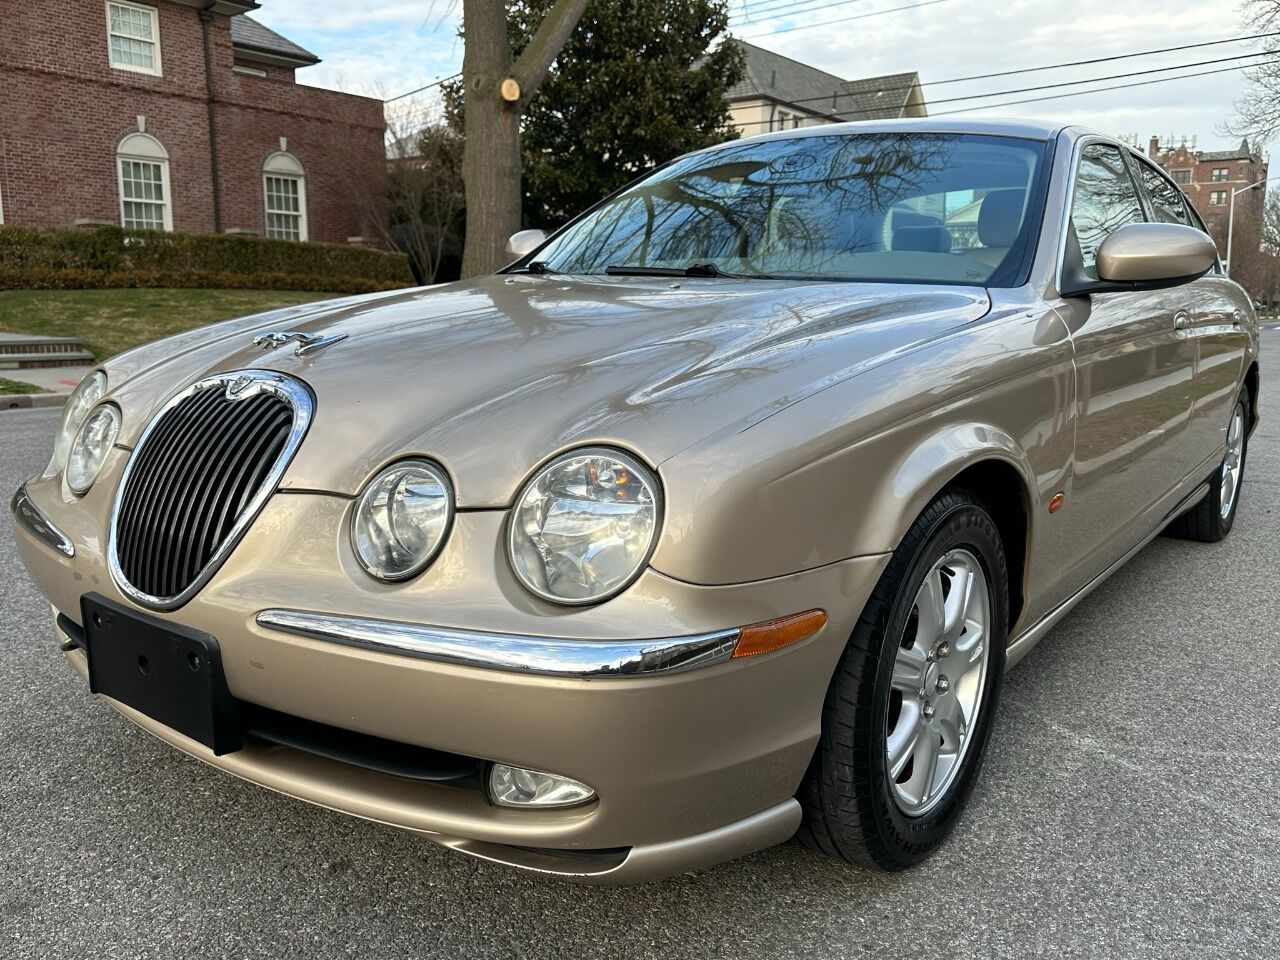 2004 Jaguar S-Type Sedan - $7,900